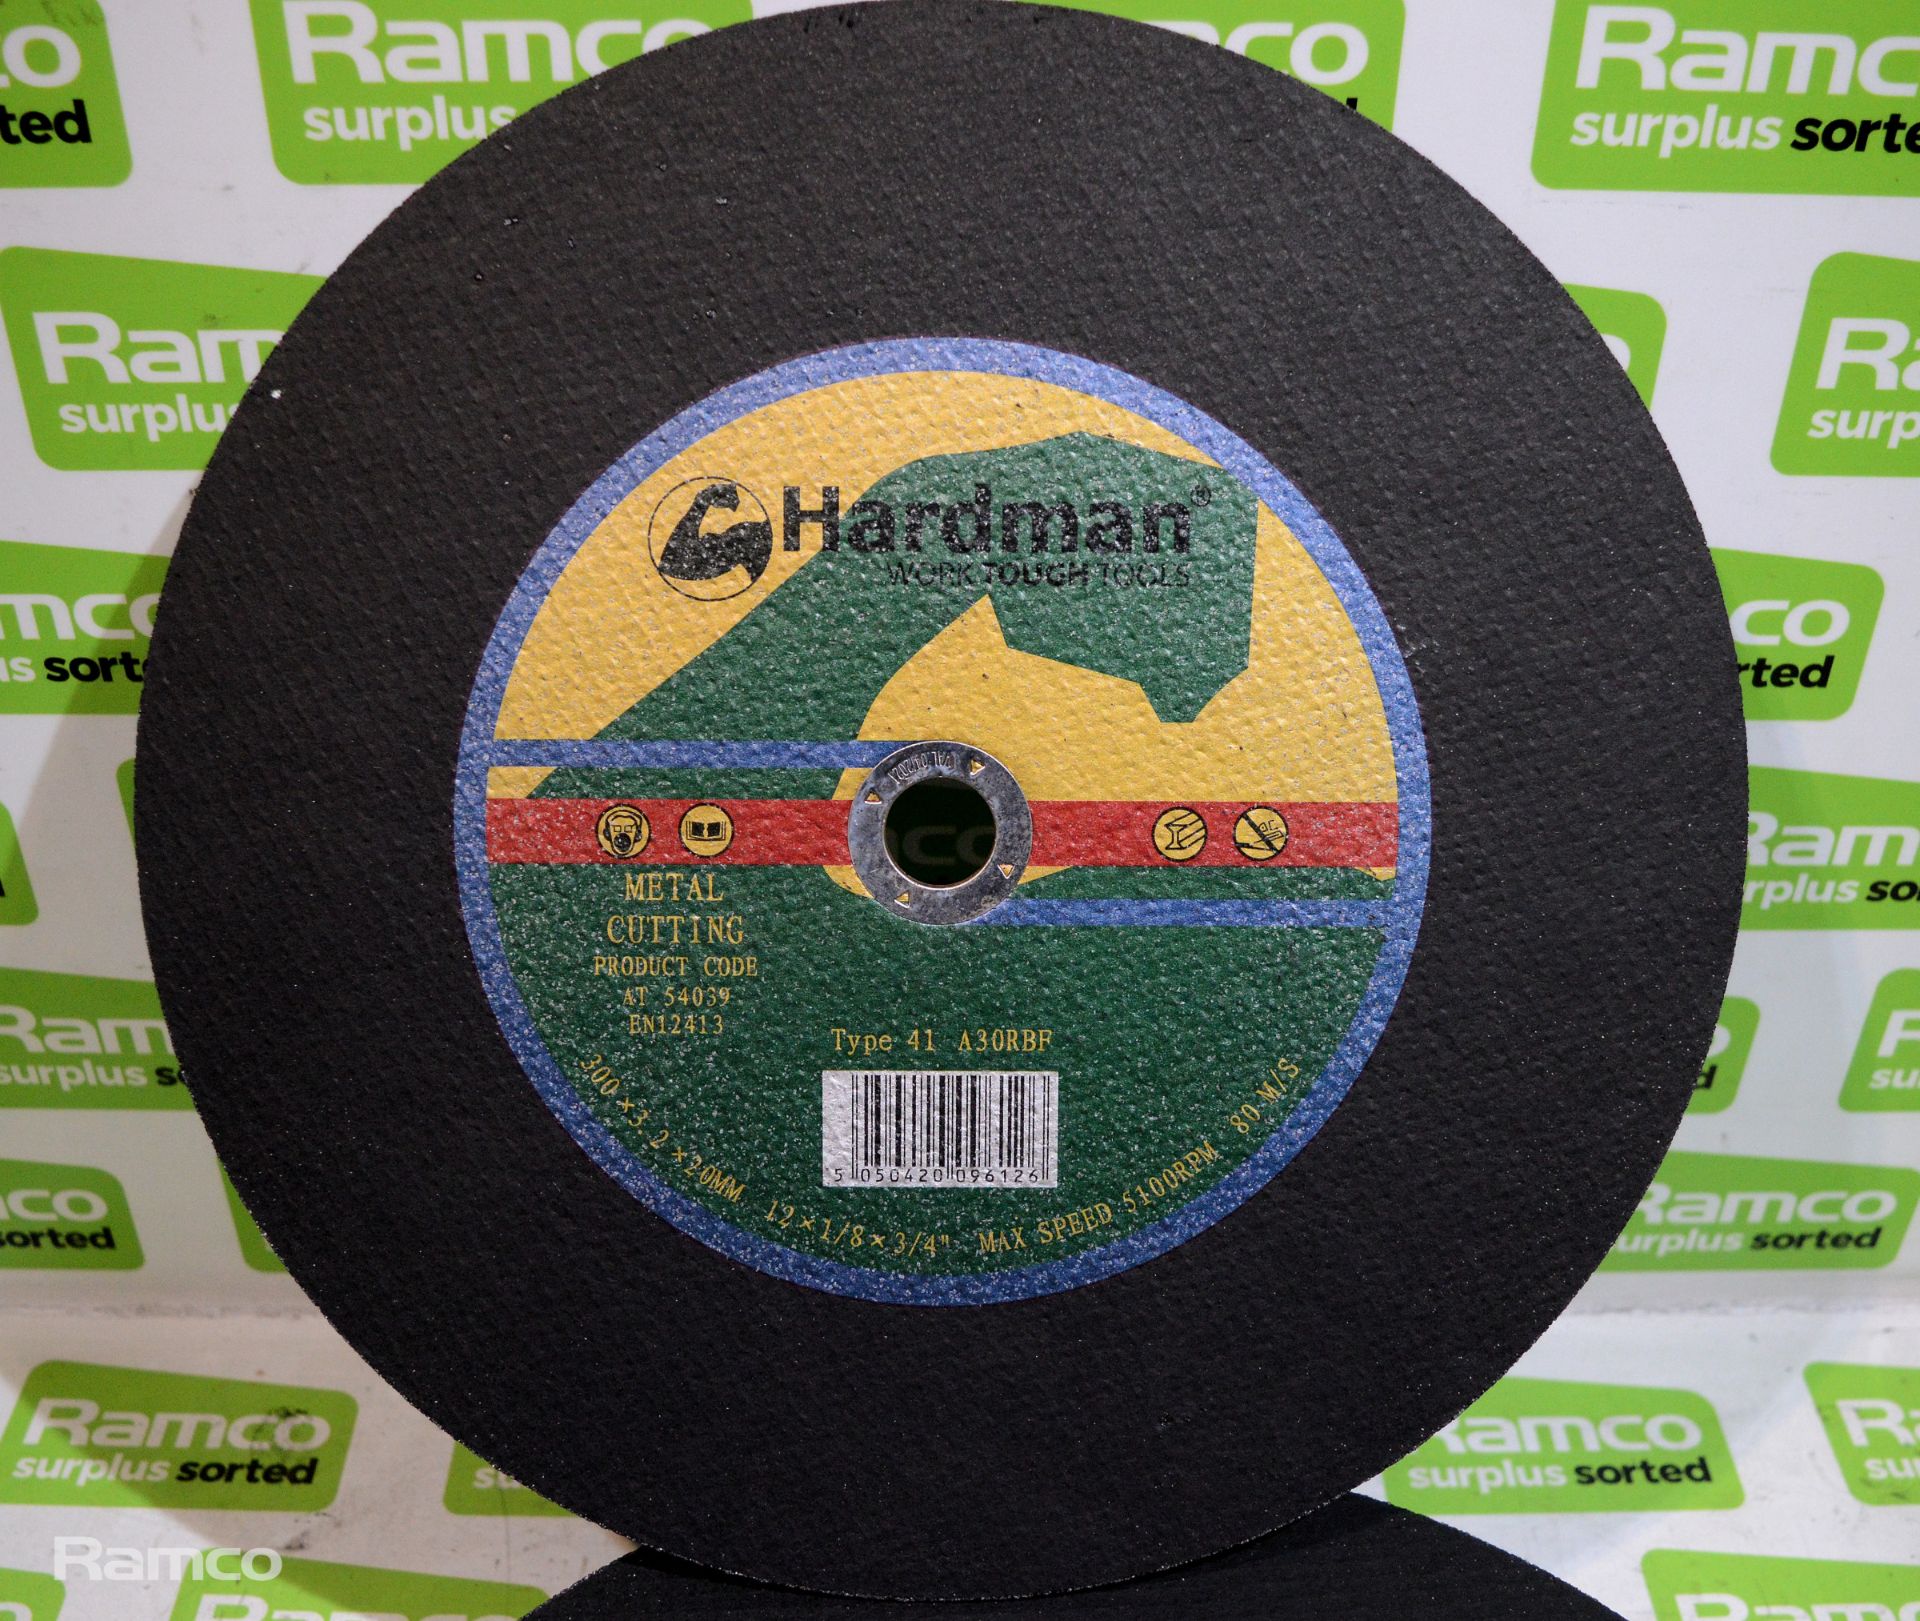 25x 12 inch metal cutting discs - Image 2 of 2